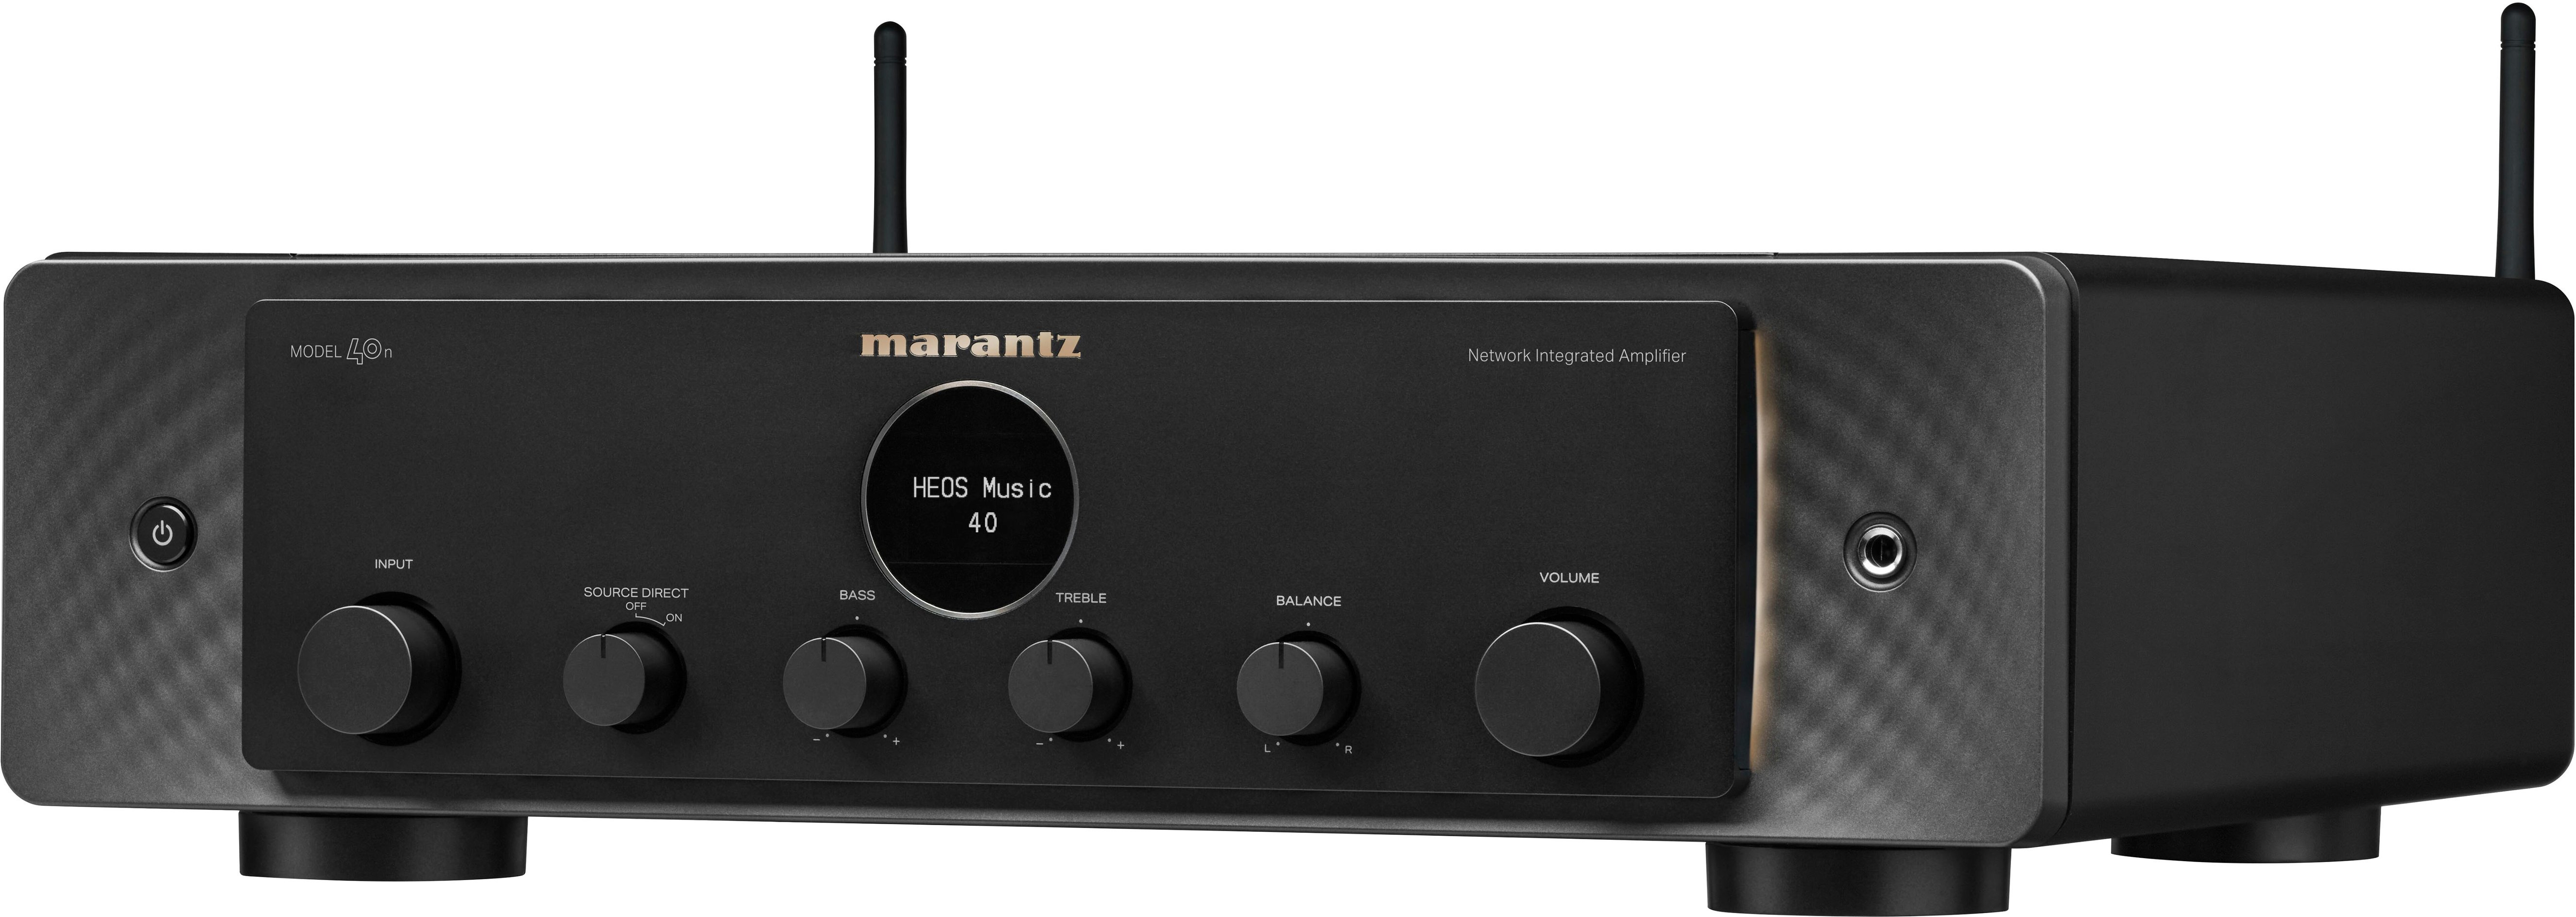 Marantz Model 40n integrated amplifier